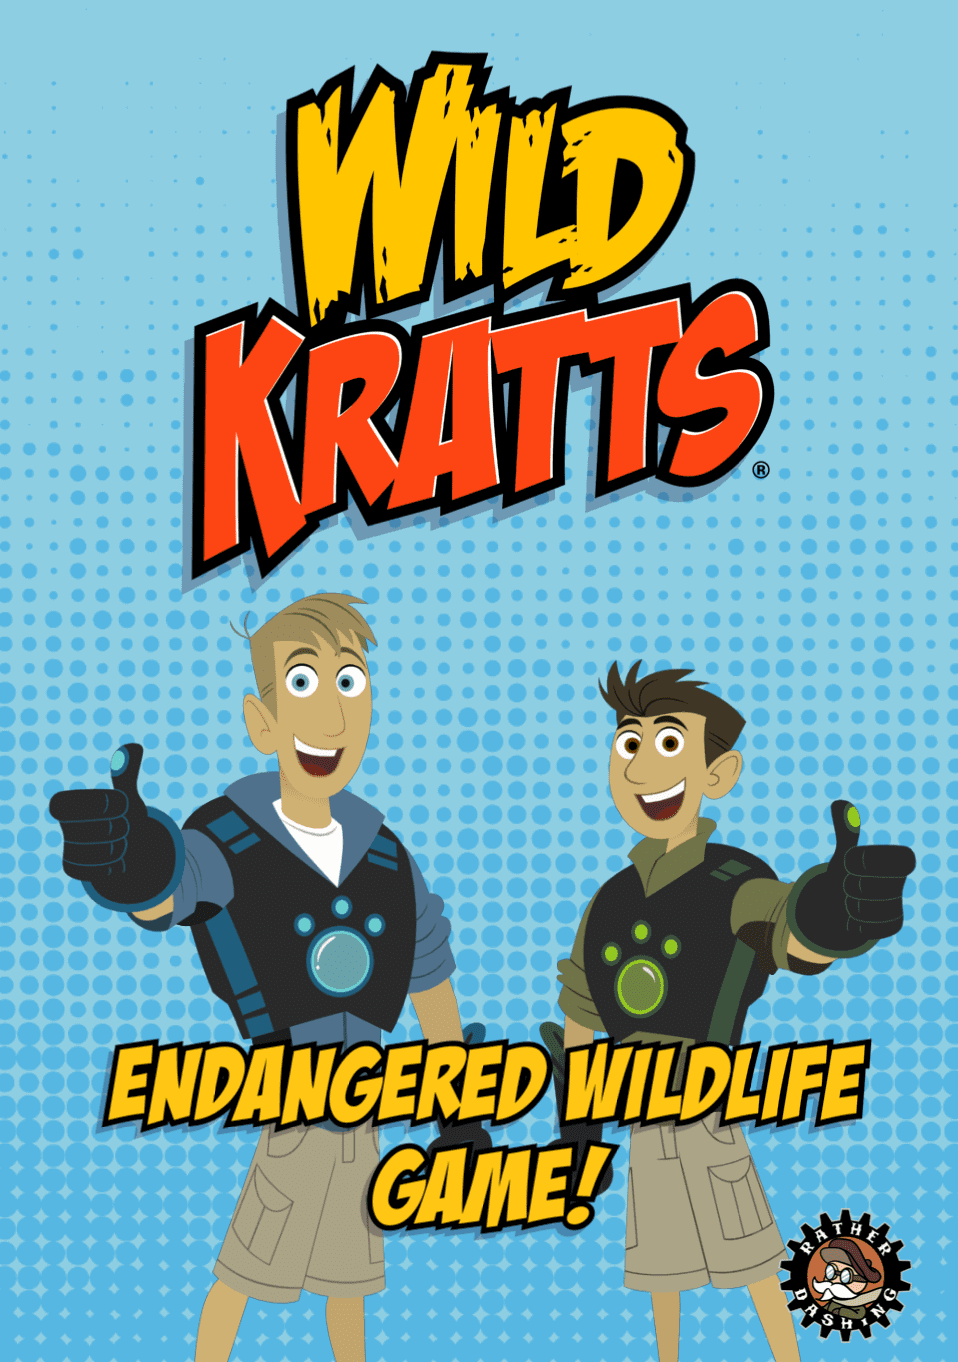 Wild Kratts Endangered Wildlife Game!